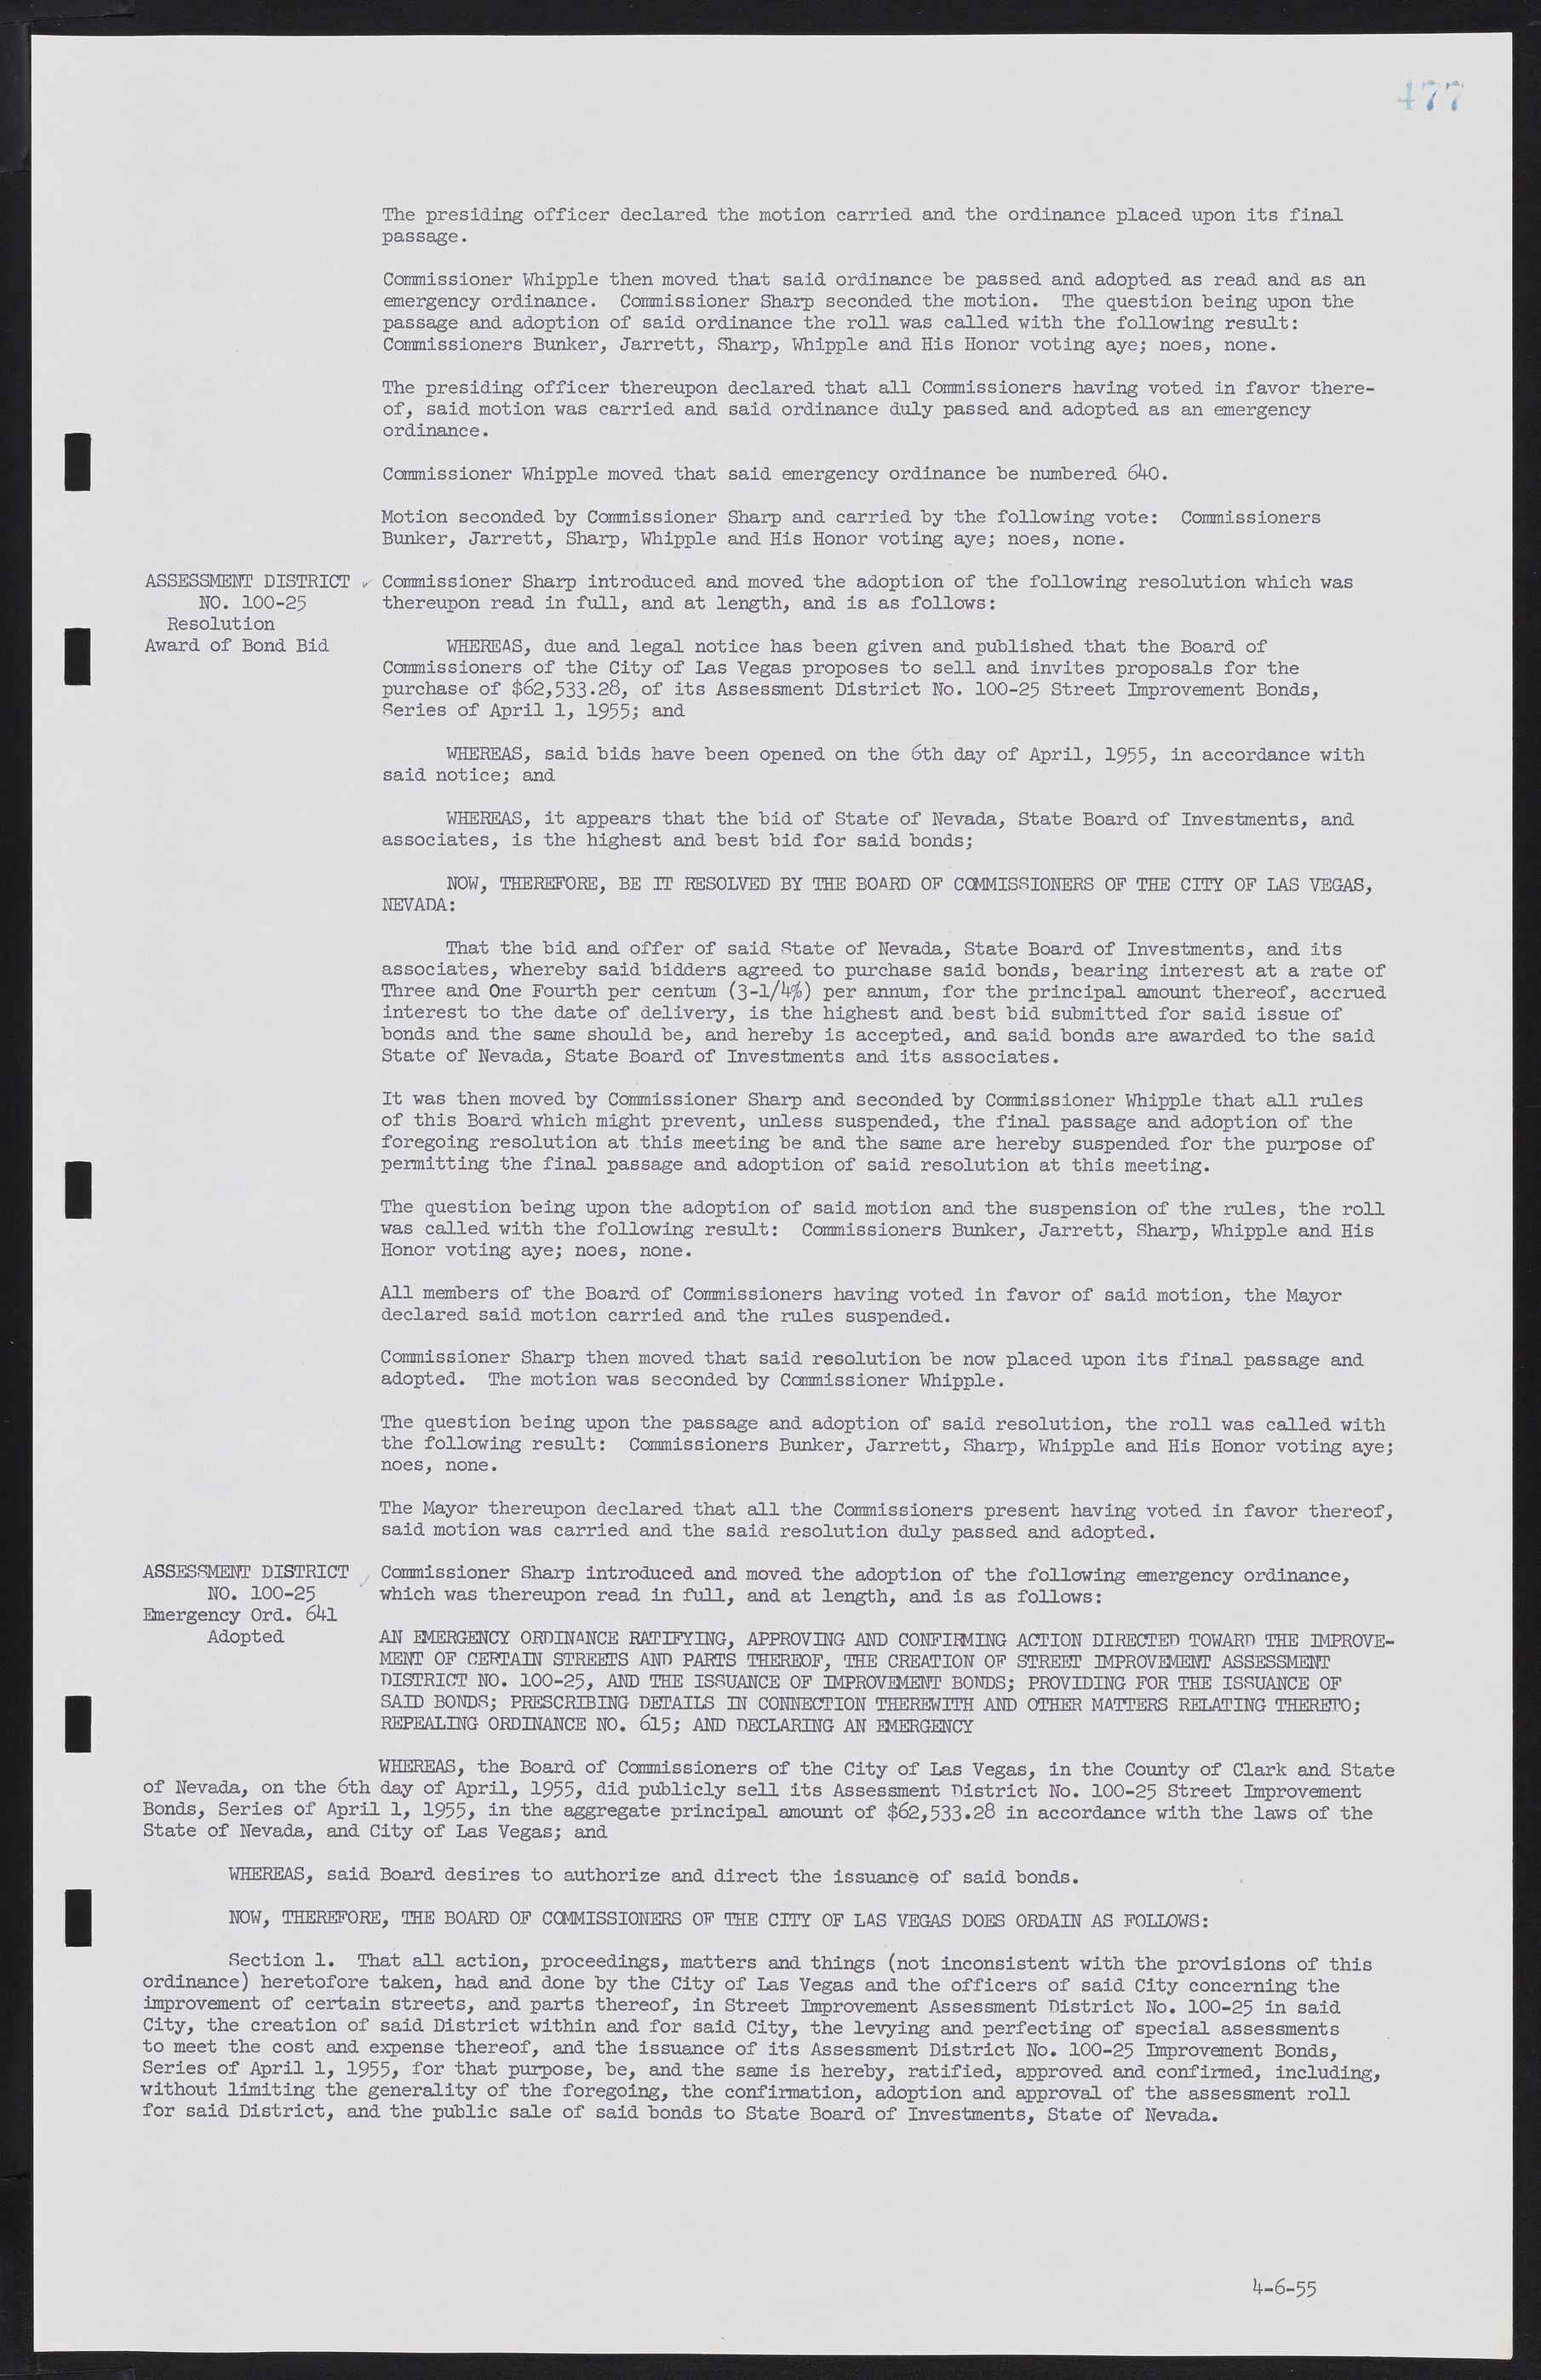 Las Vegas City Commission Minutes, February 17, 1954 to September 21, 1955, lvc000009-483